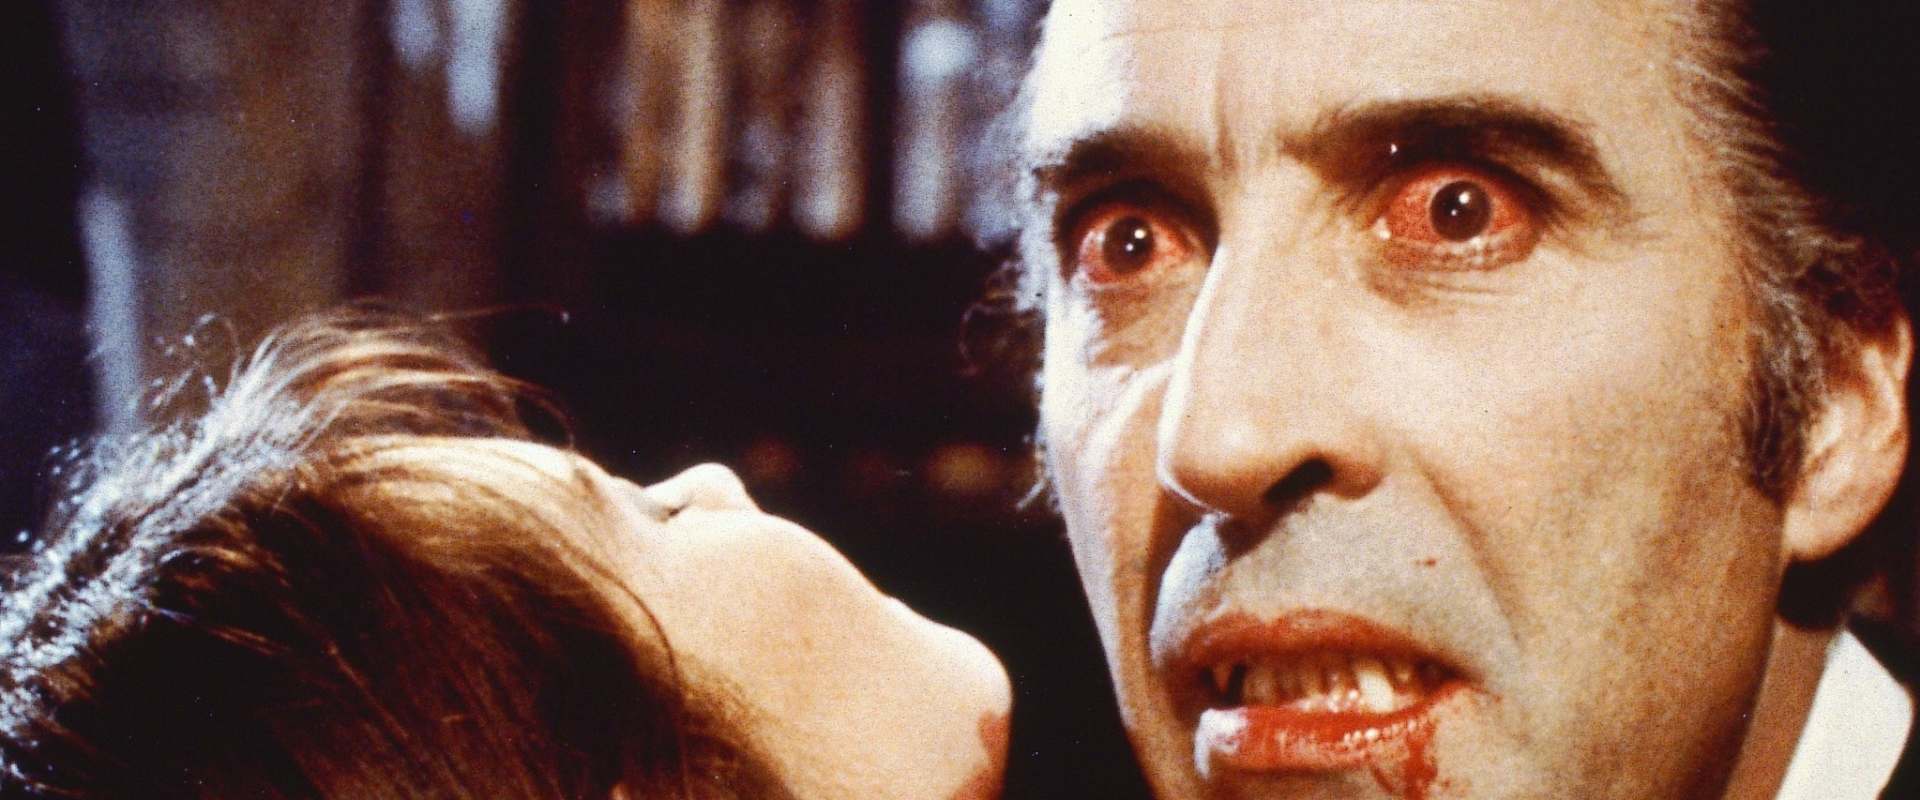 Dracula A.D. 1972 background 2